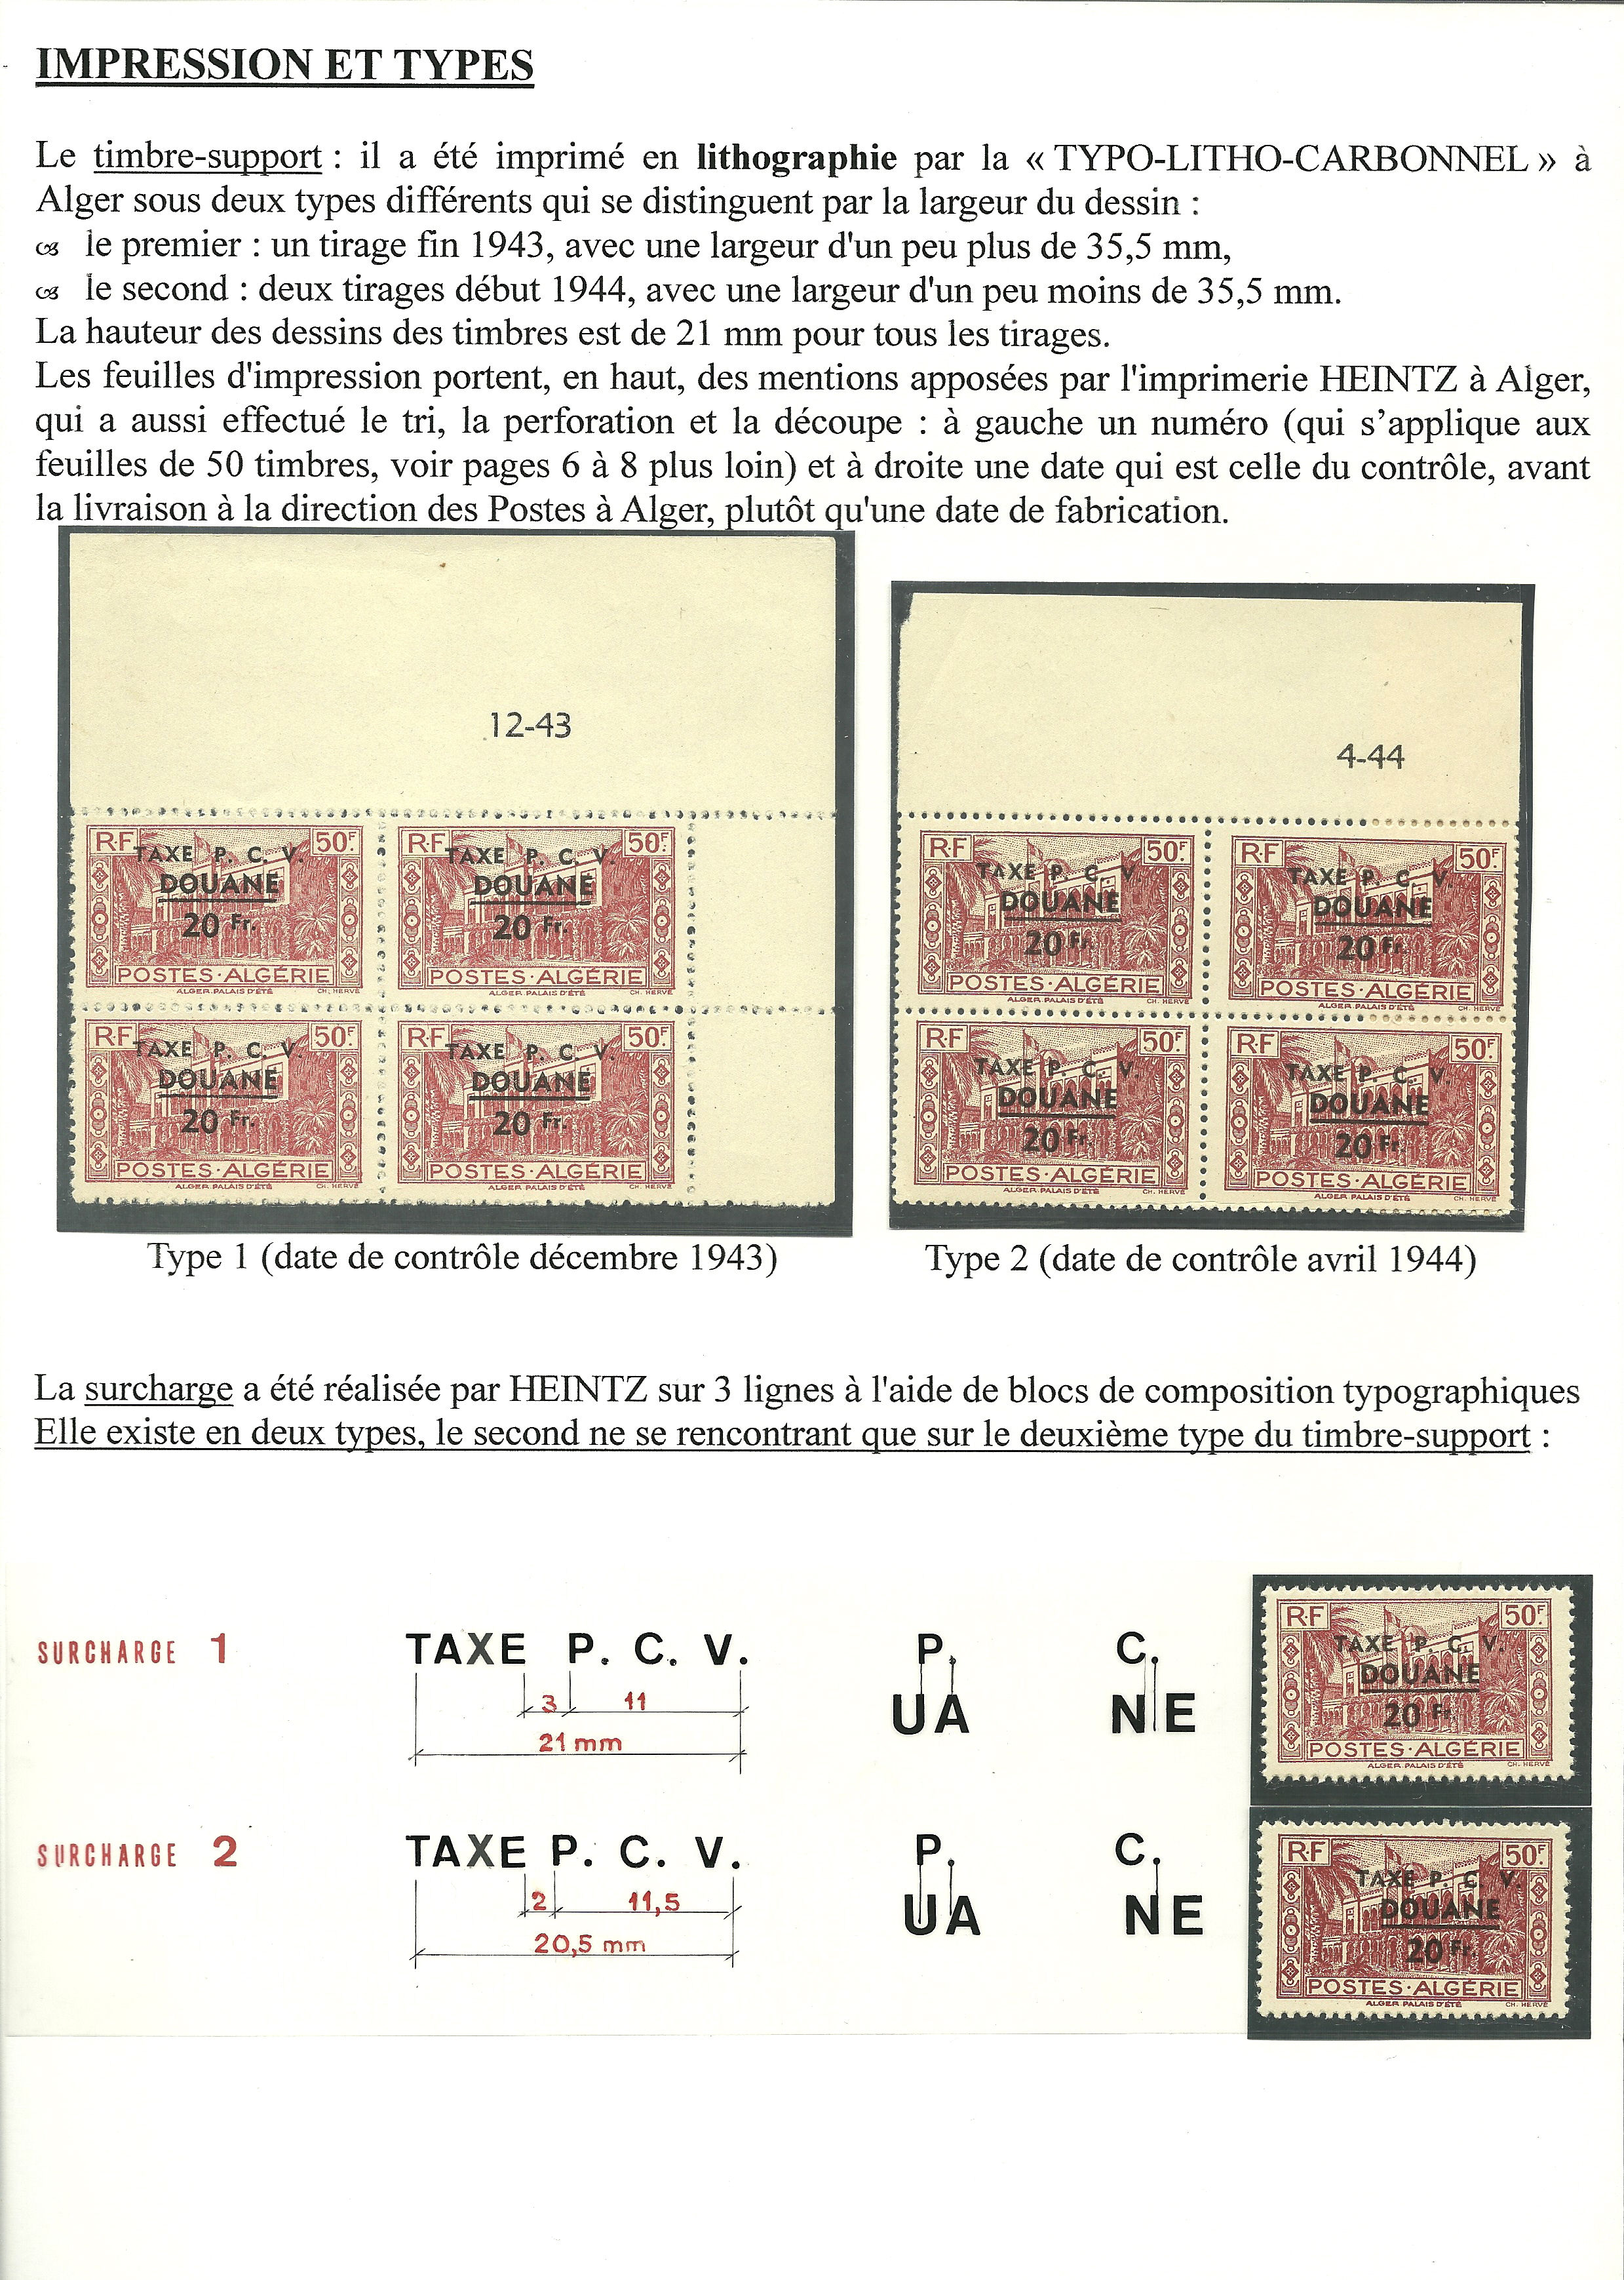 Taxe ���������P.C.V Douane��������� Alg������rie (1944 / 1945) p. 2